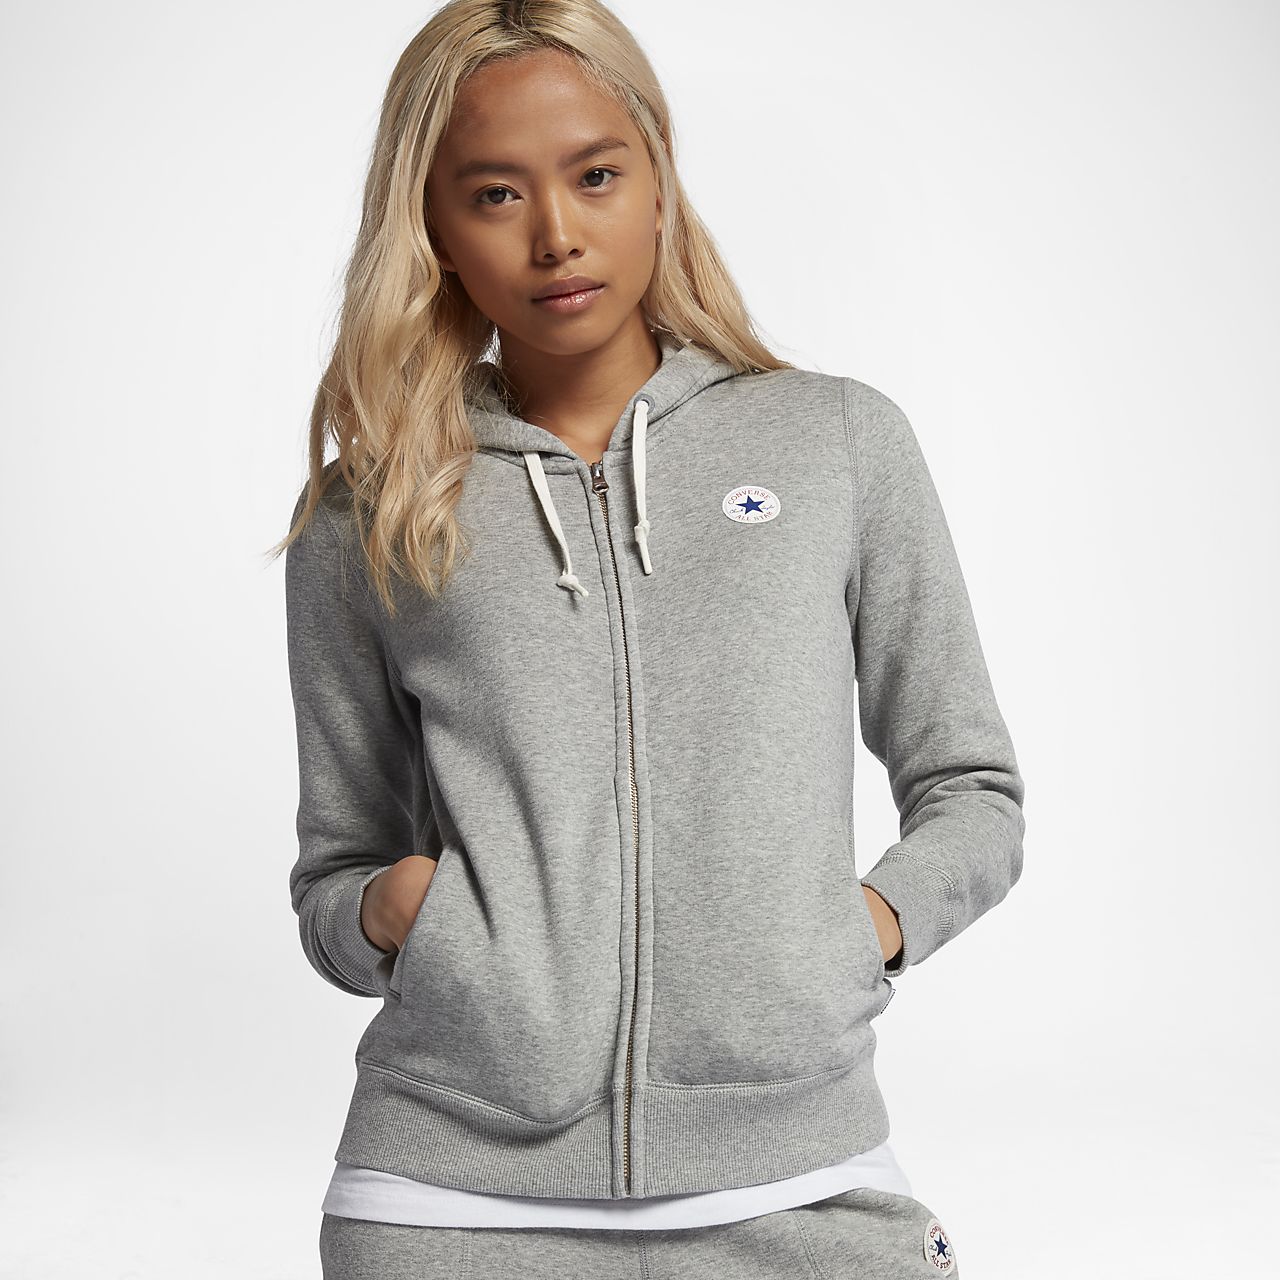 converse hoodie womens grey Cheaper 